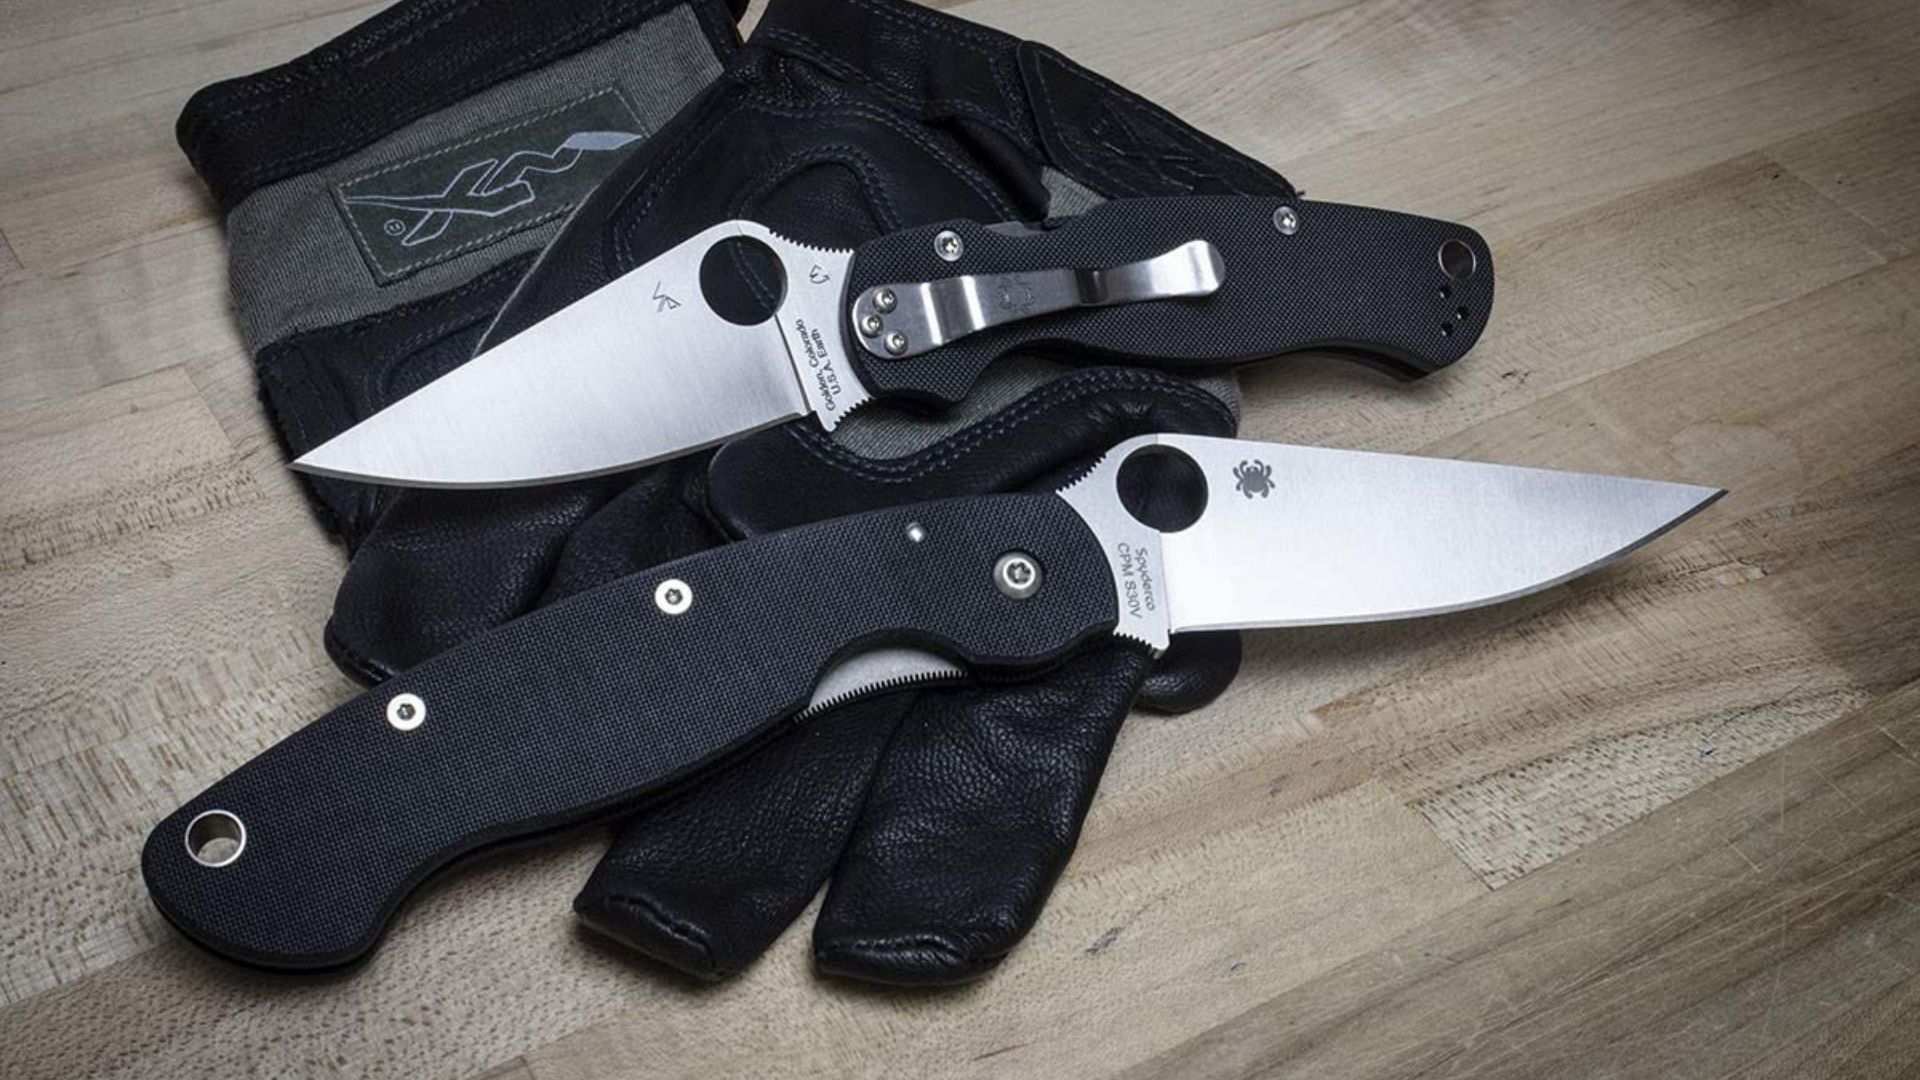 The Best EDC Pocket Knives Under 3